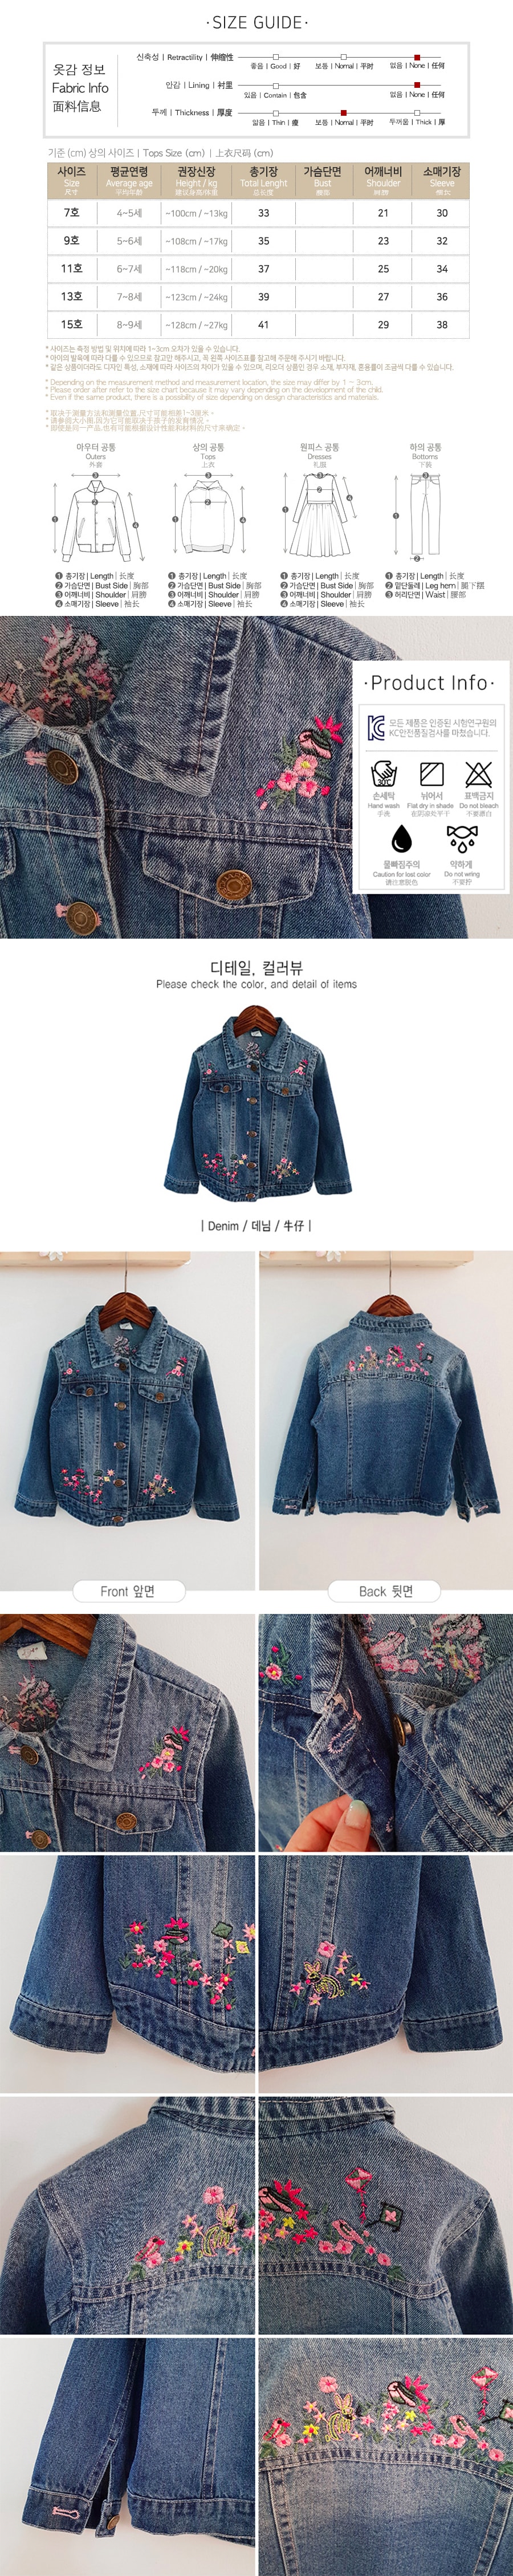 Kid Girl Floral Embroidered Denim Jacket #Denim 9(5-6years)